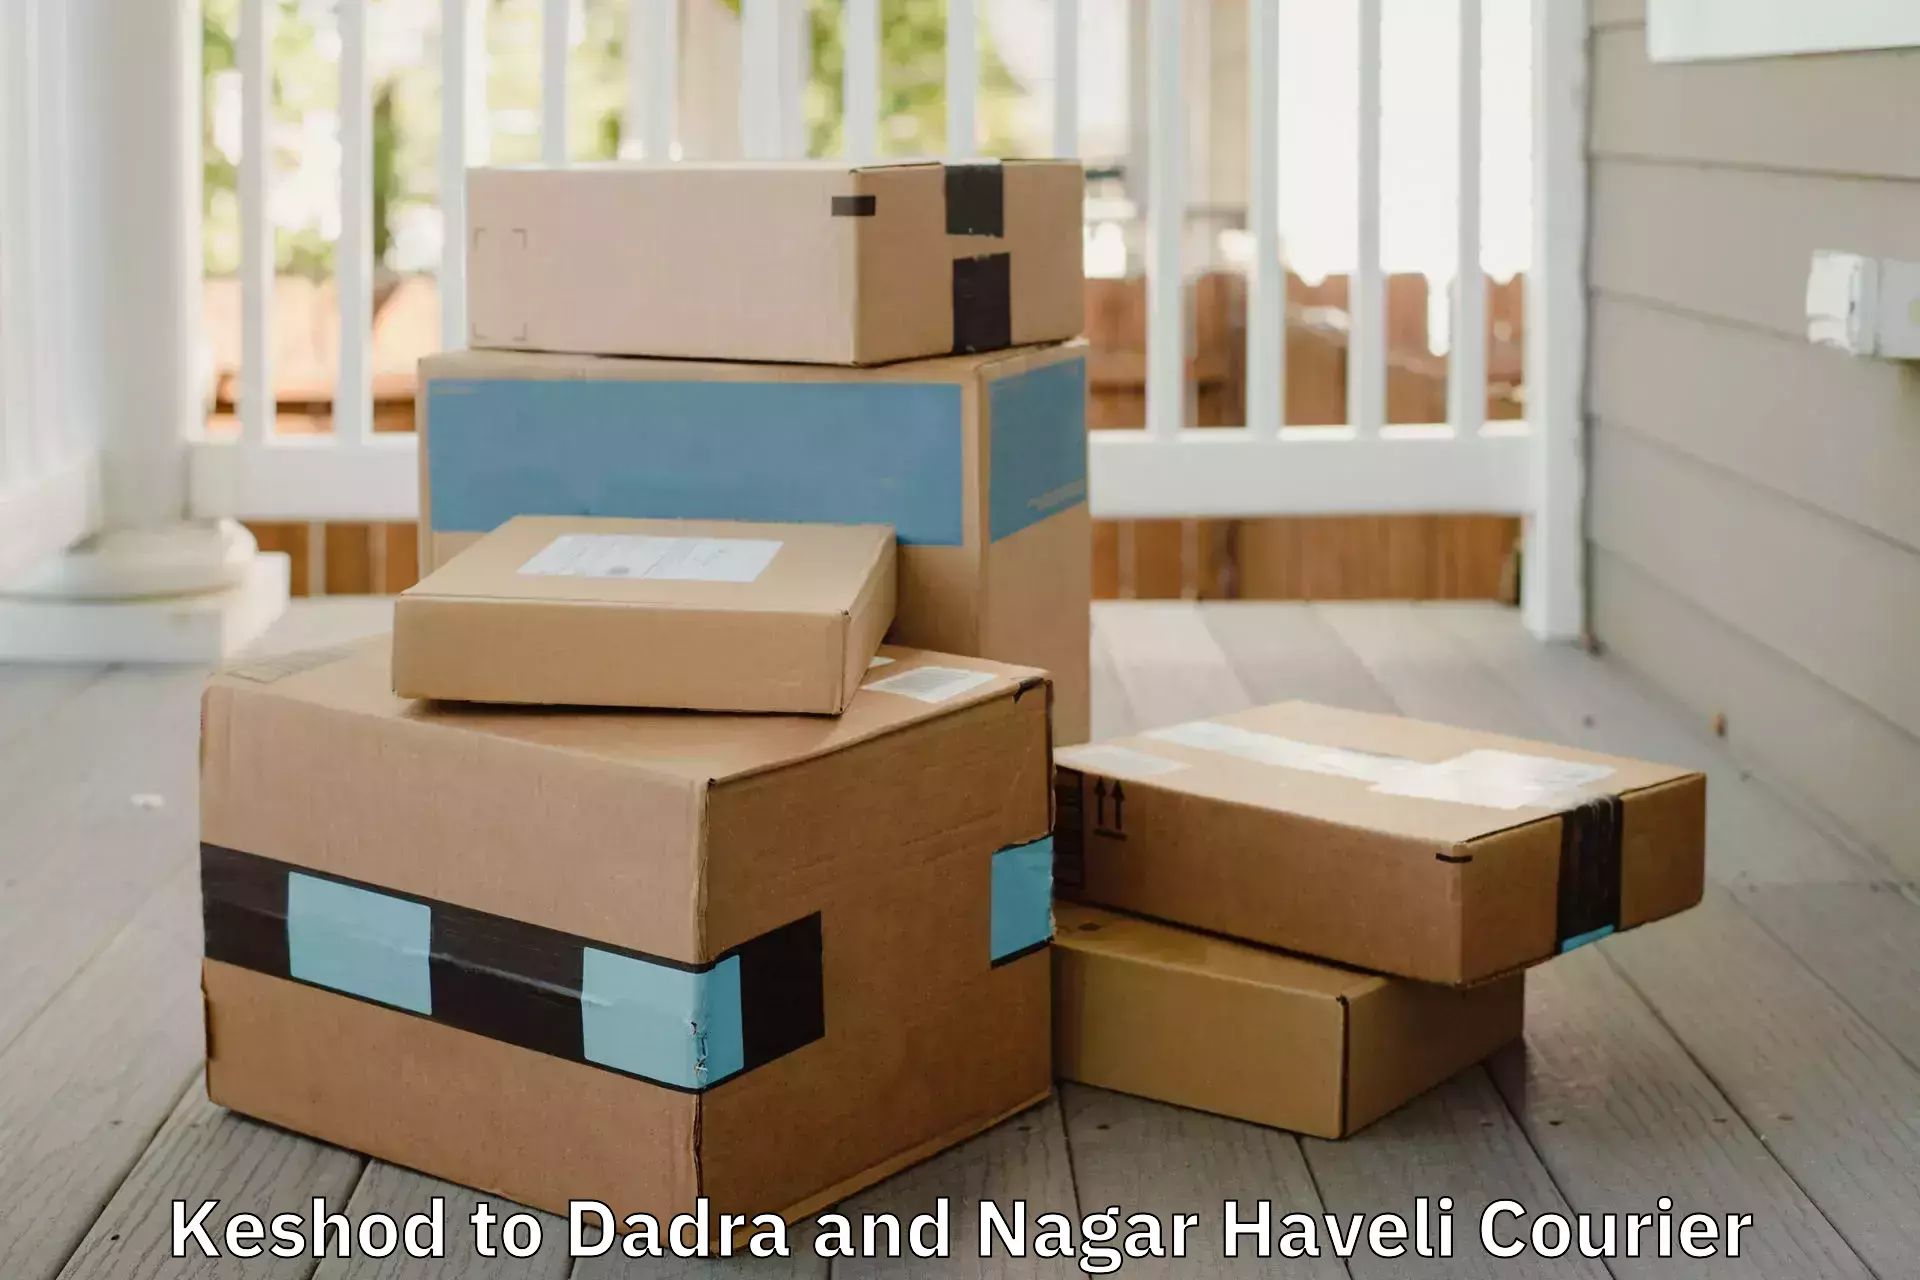 Trusted moving company Keshod to Dadra and Nagar Haveli